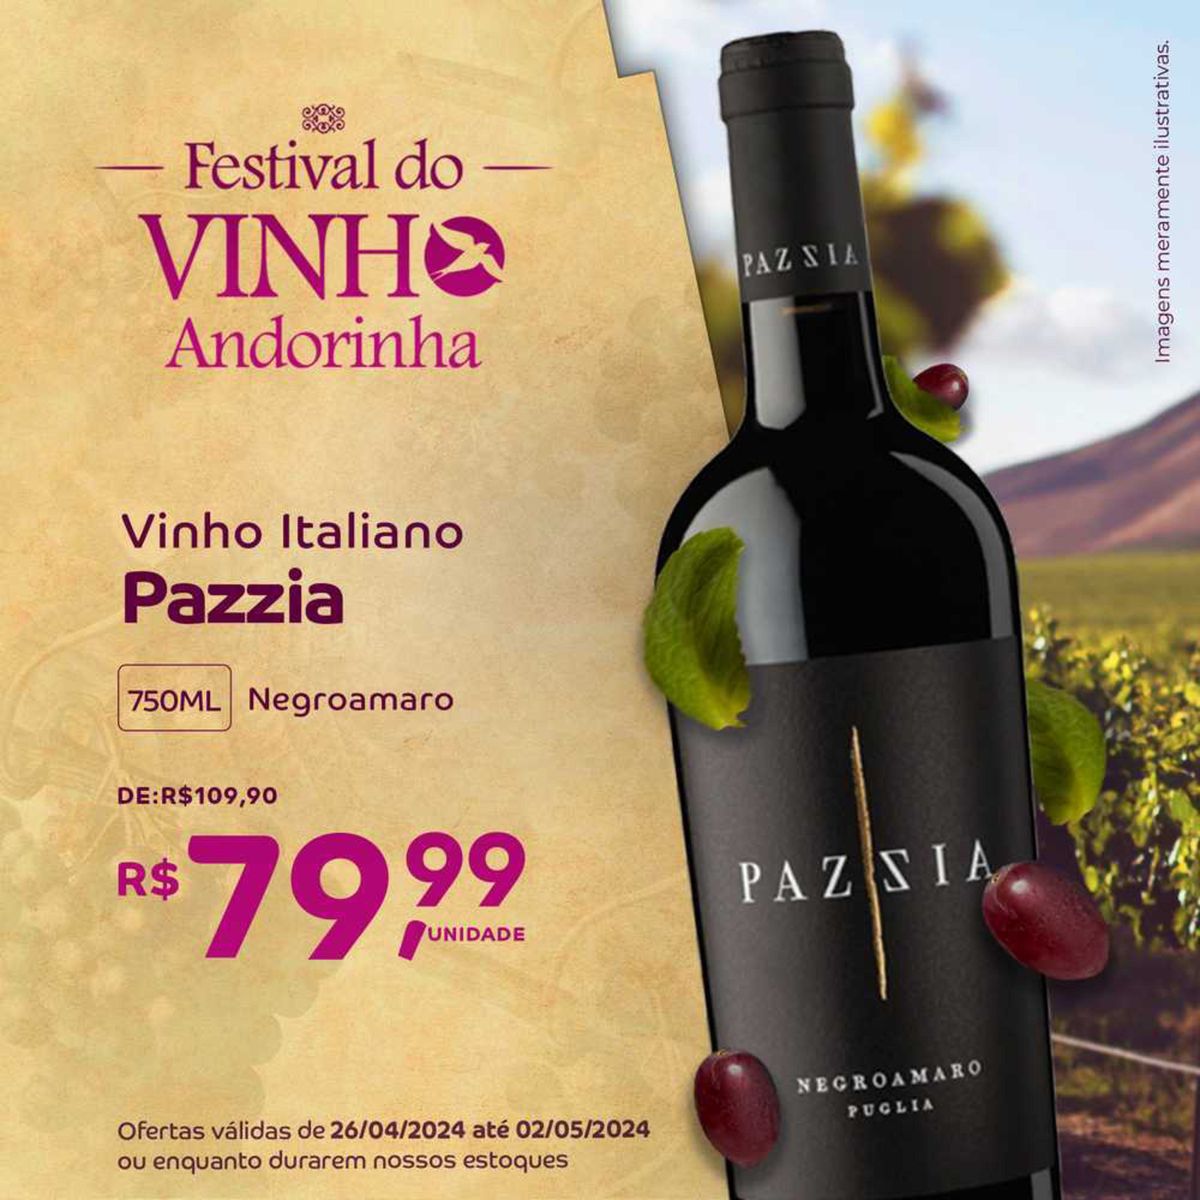 Vinho Italiano Pazzia 750ML por R$ 79,99